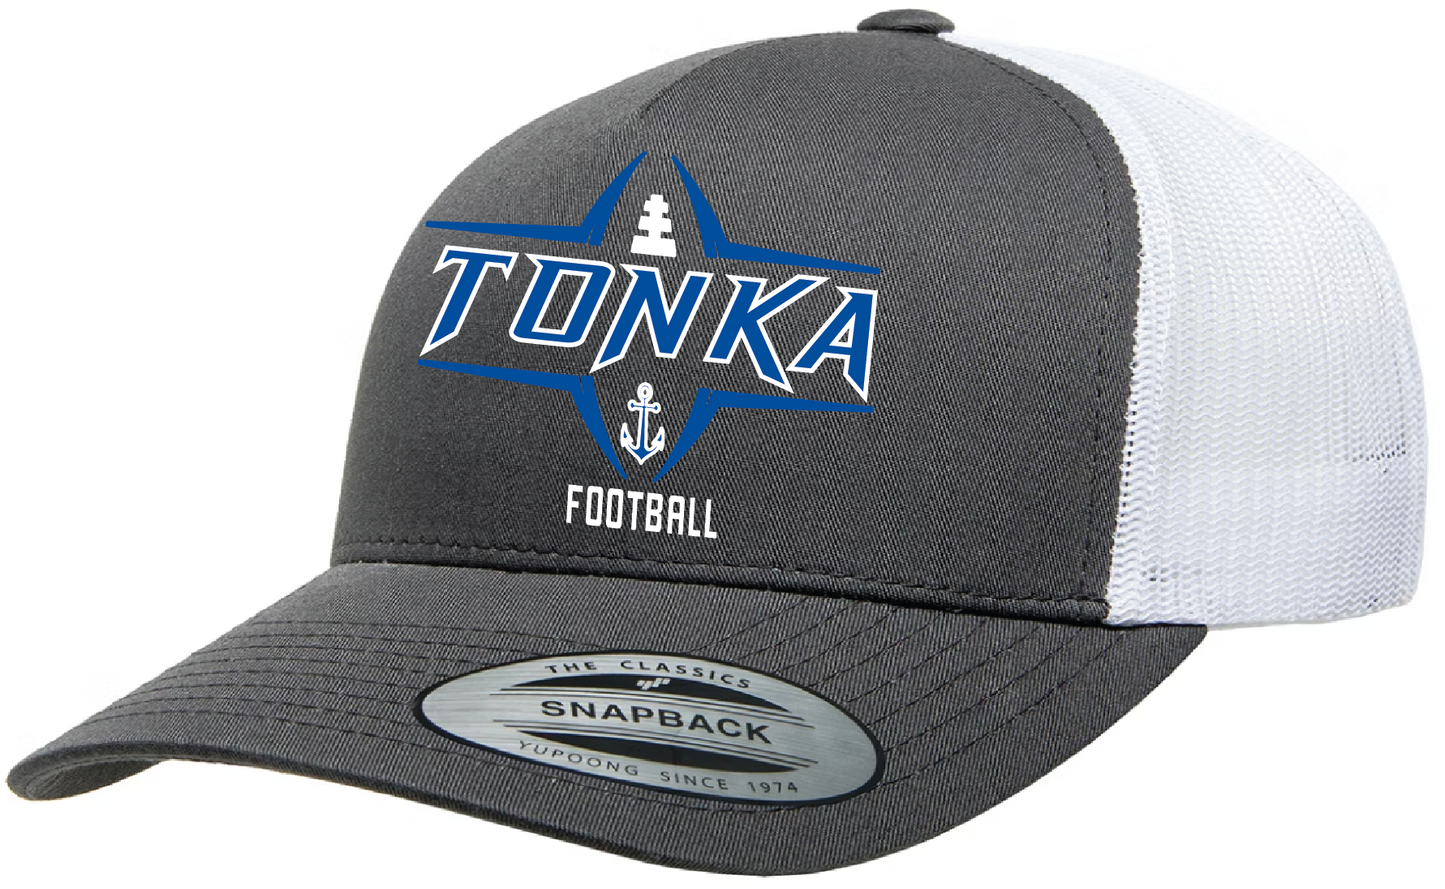 Football - 5 Panel Snapback Trucker Hat